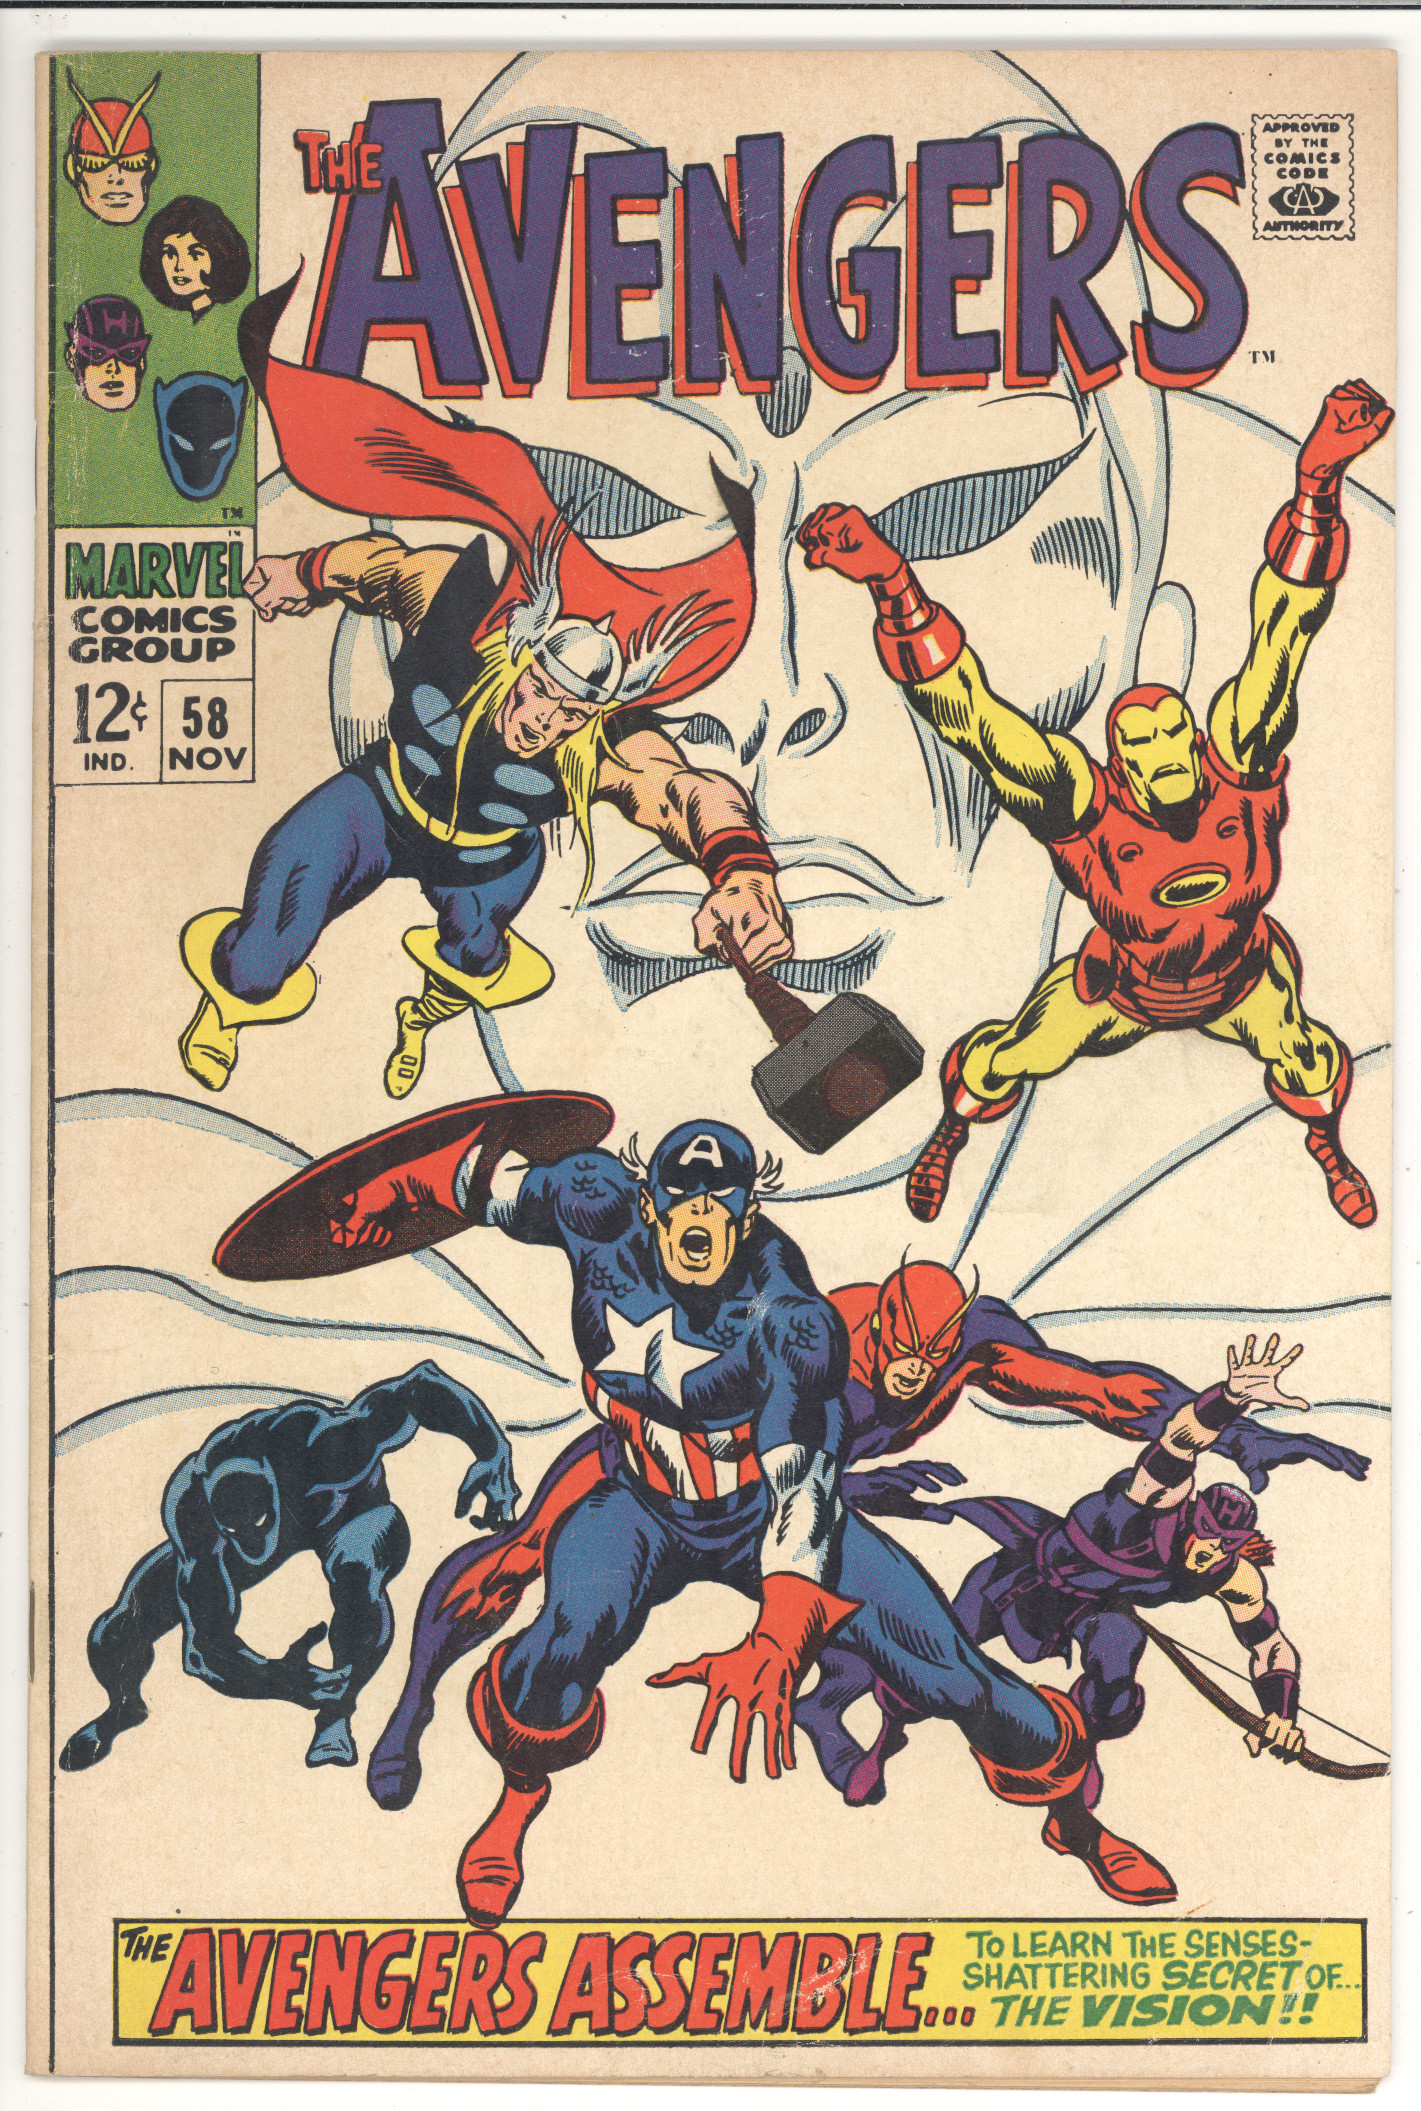 Avengers #58 front